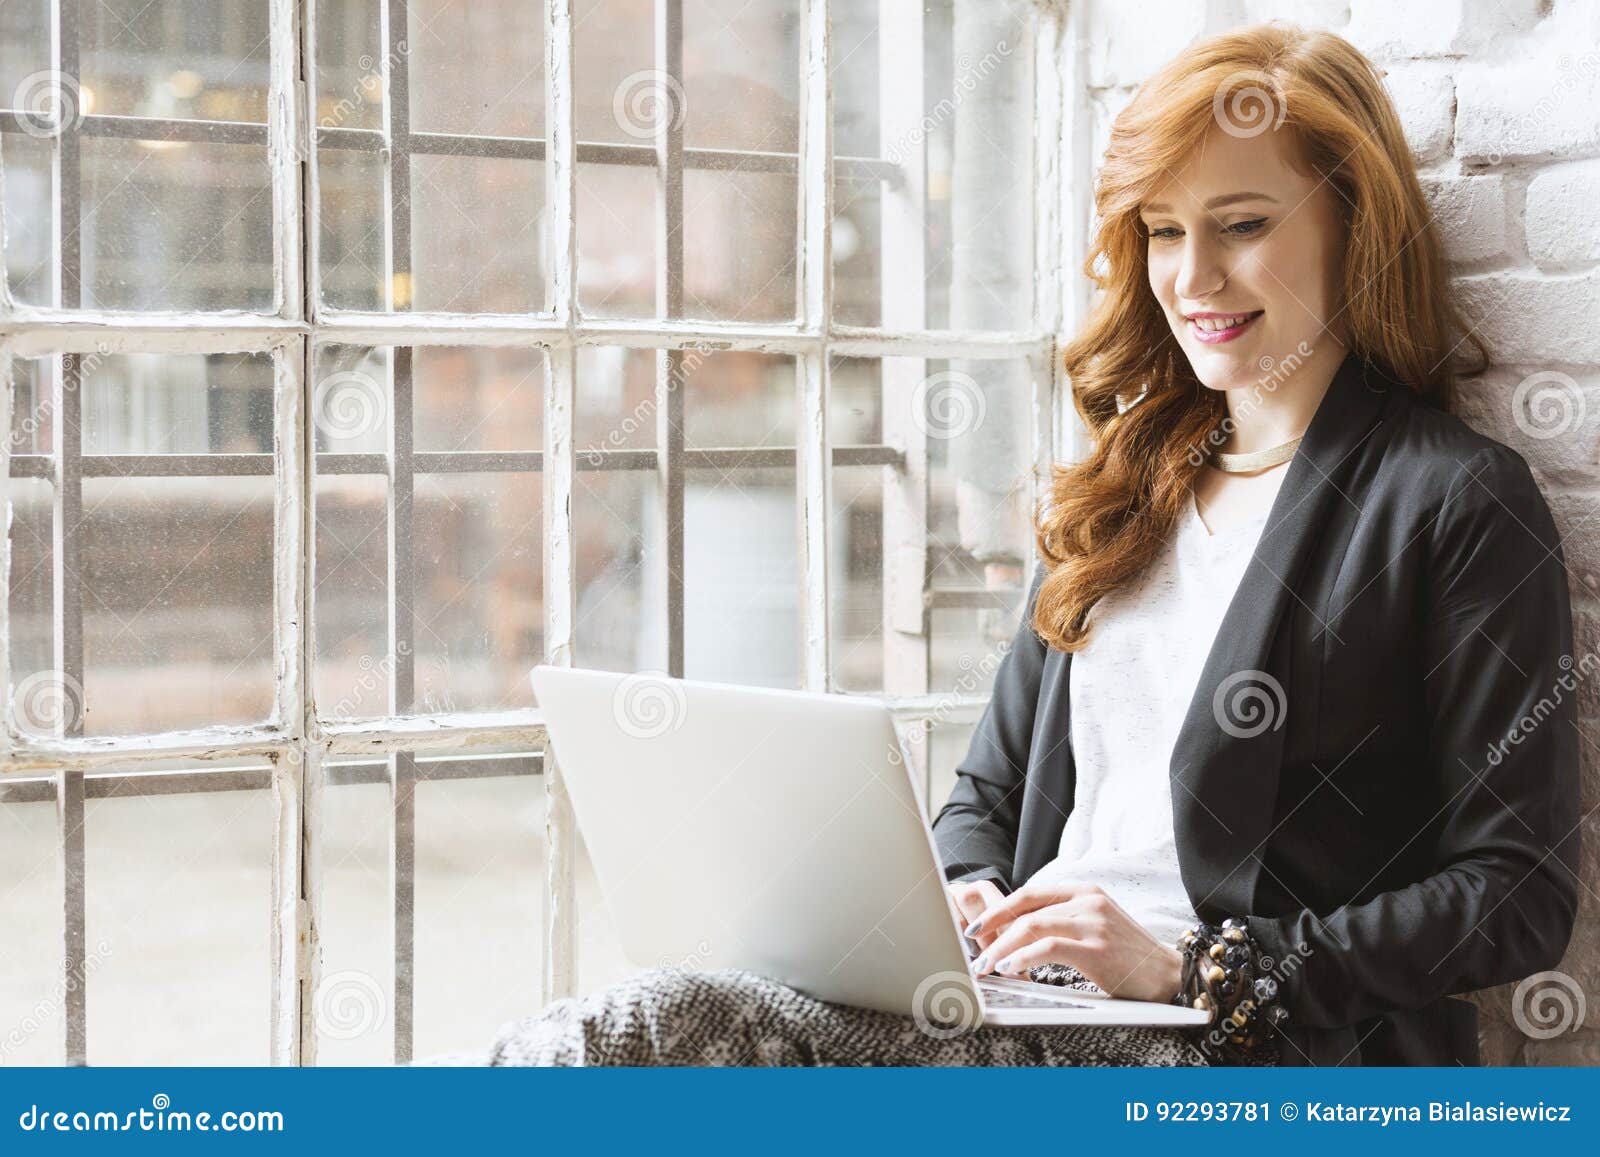 freelance copywriter sitting on windowsill